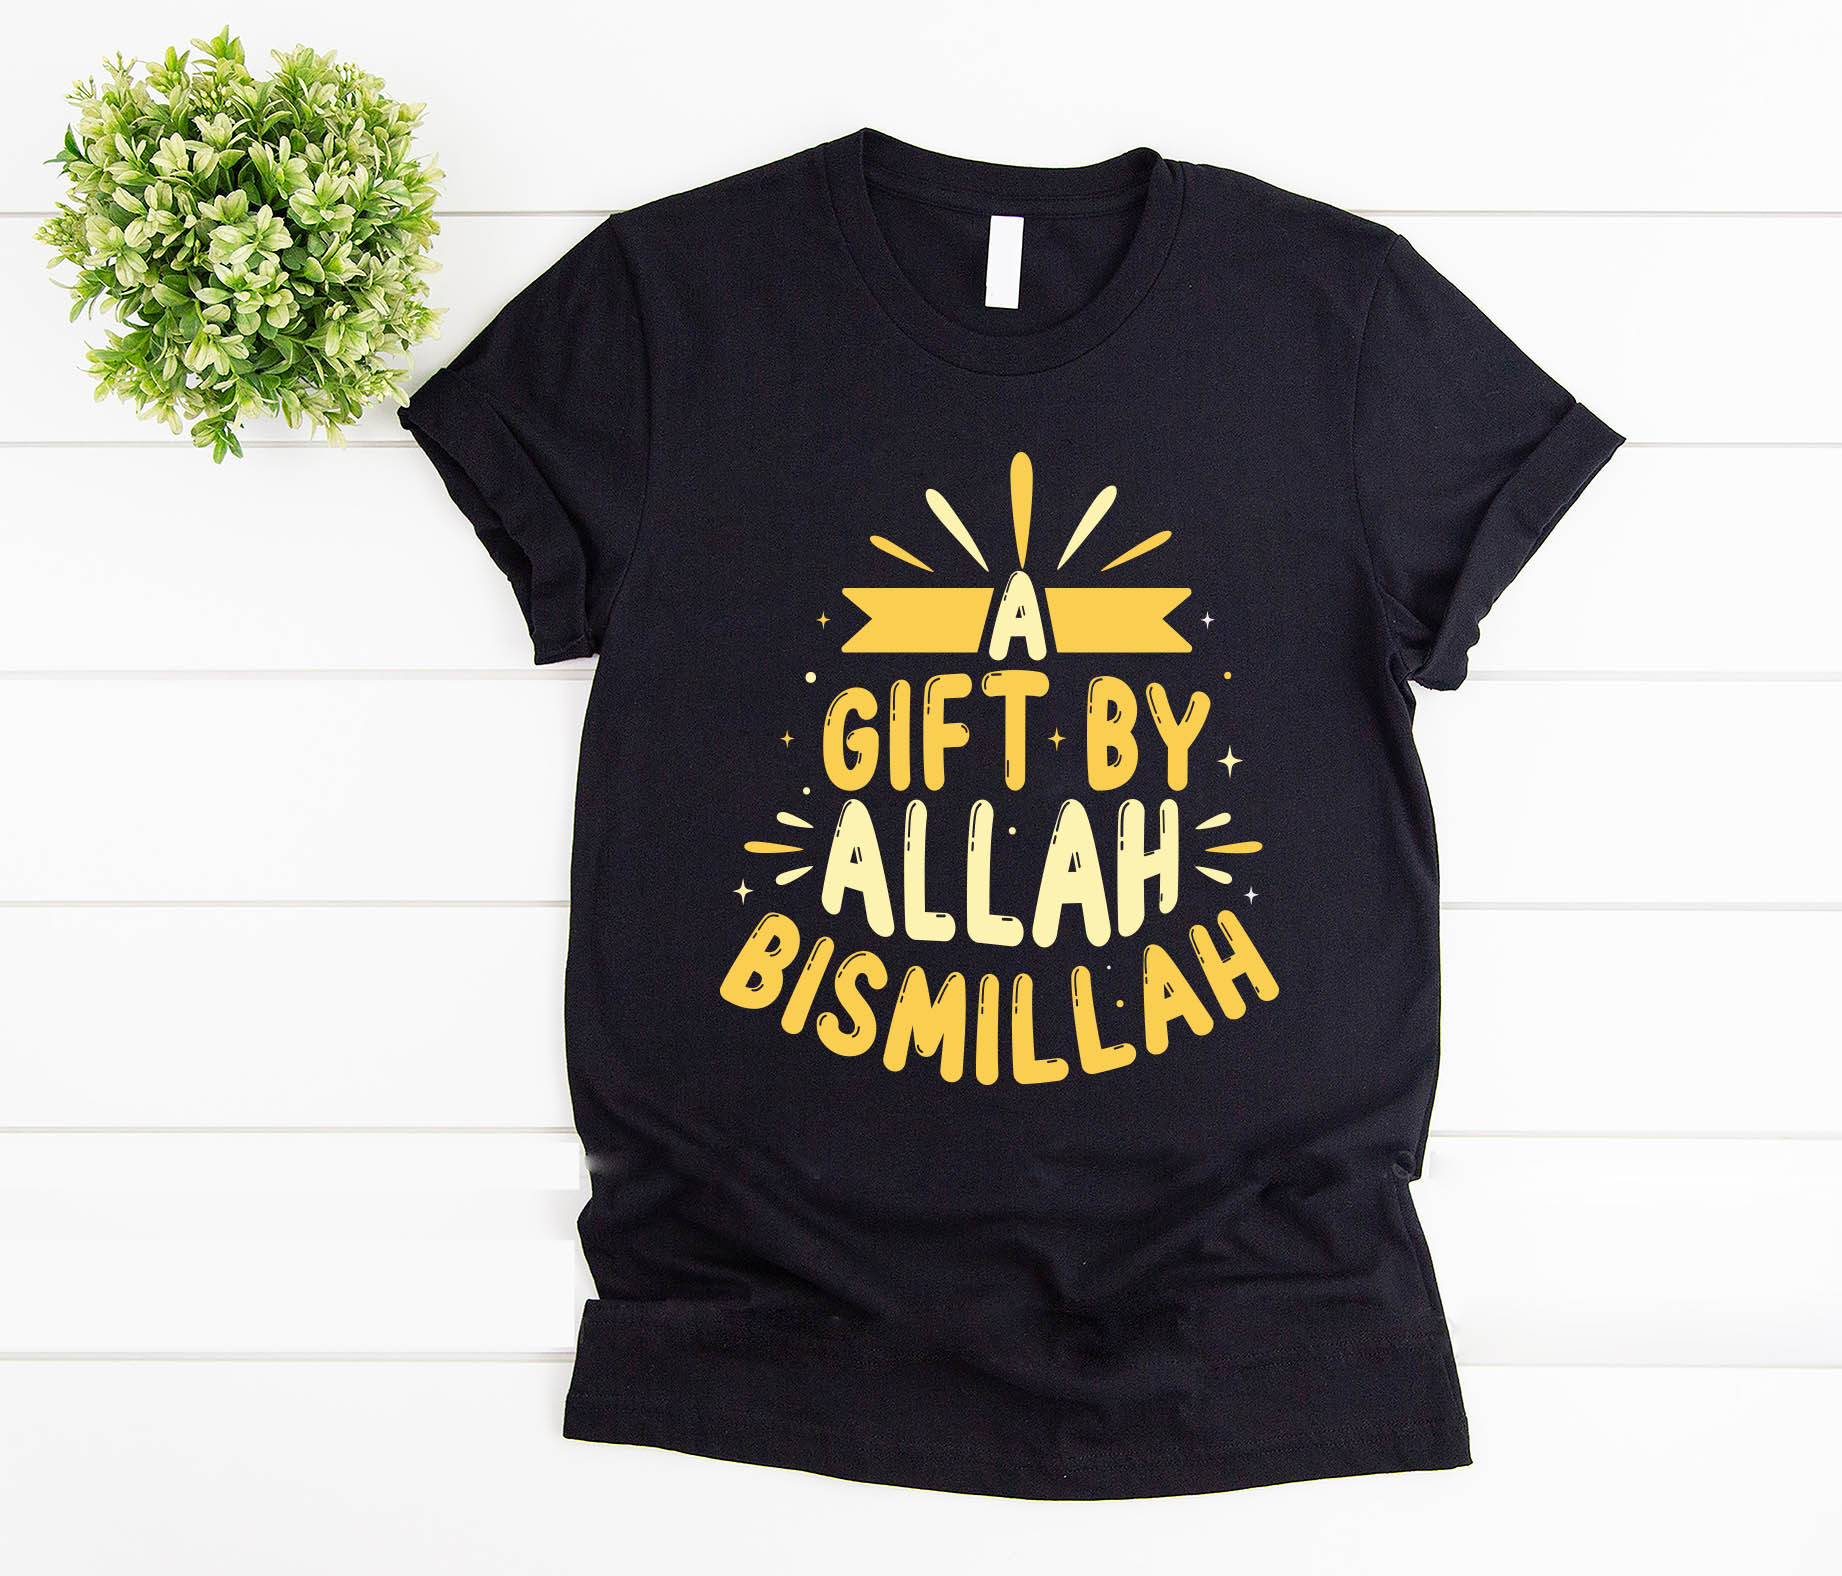 T - shirt that says a gift by allah bismillah.